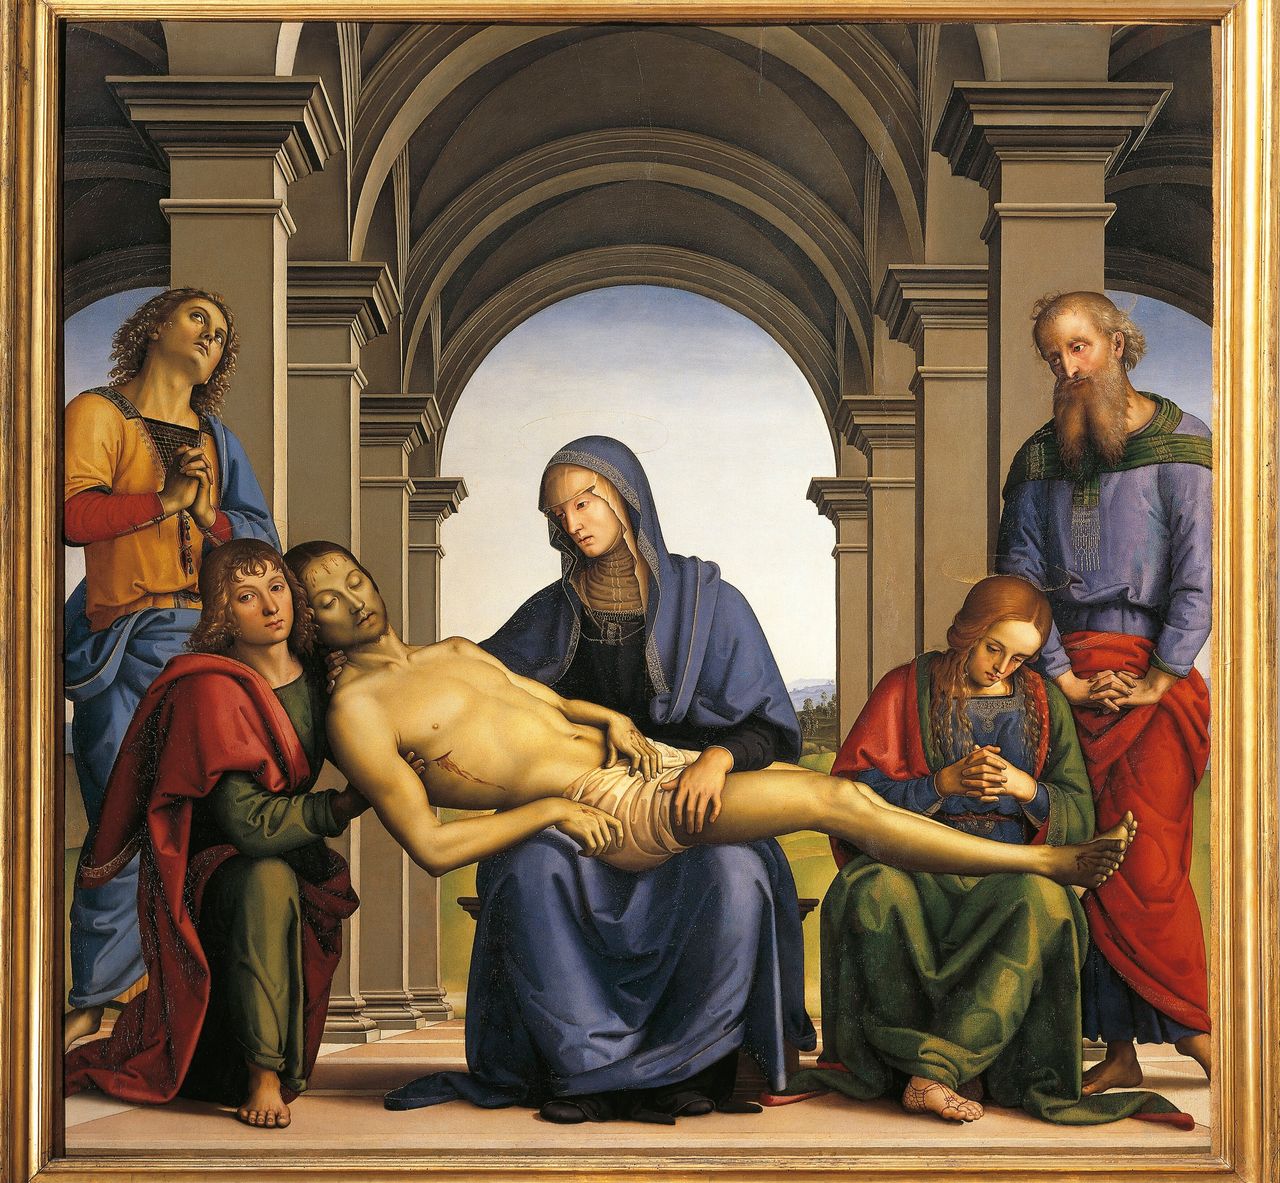  Pieta, 1493-1494, by Pietro Perugino (ca 1450-1523), oil on panel. (Photo by DeAgostini/Getty Images)